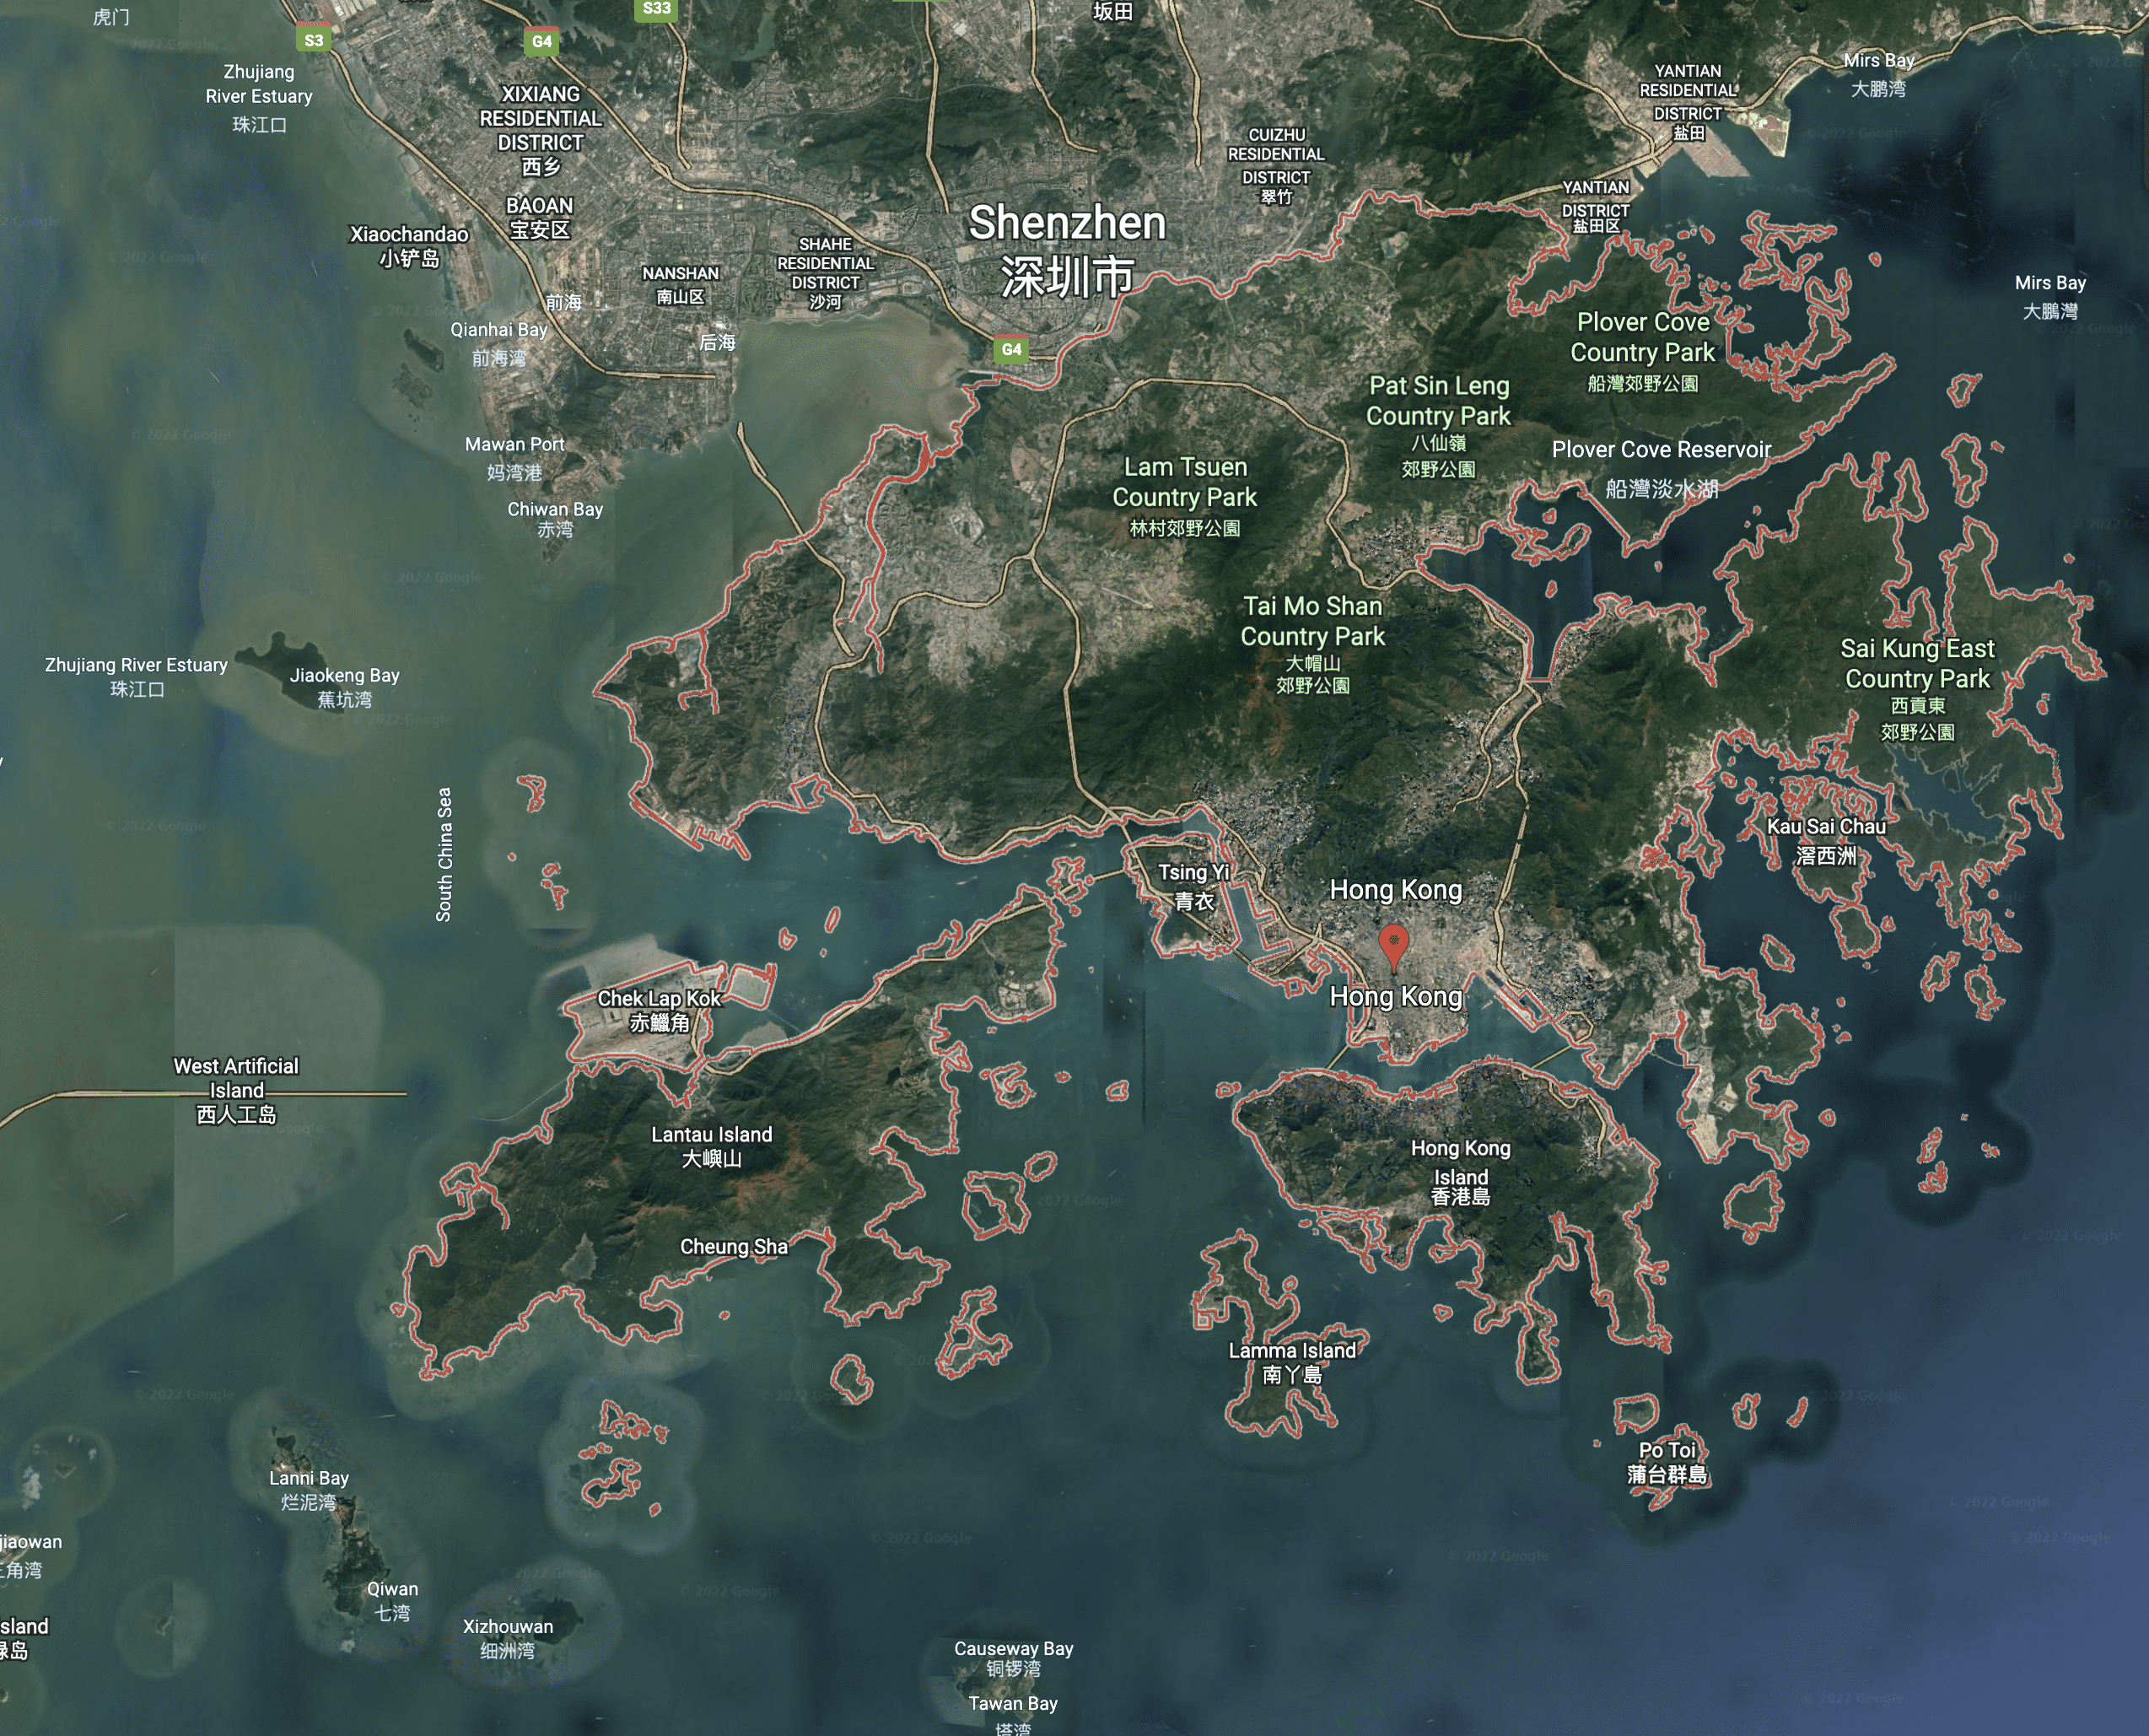 Google Earth Satellite Image of Hong Kong